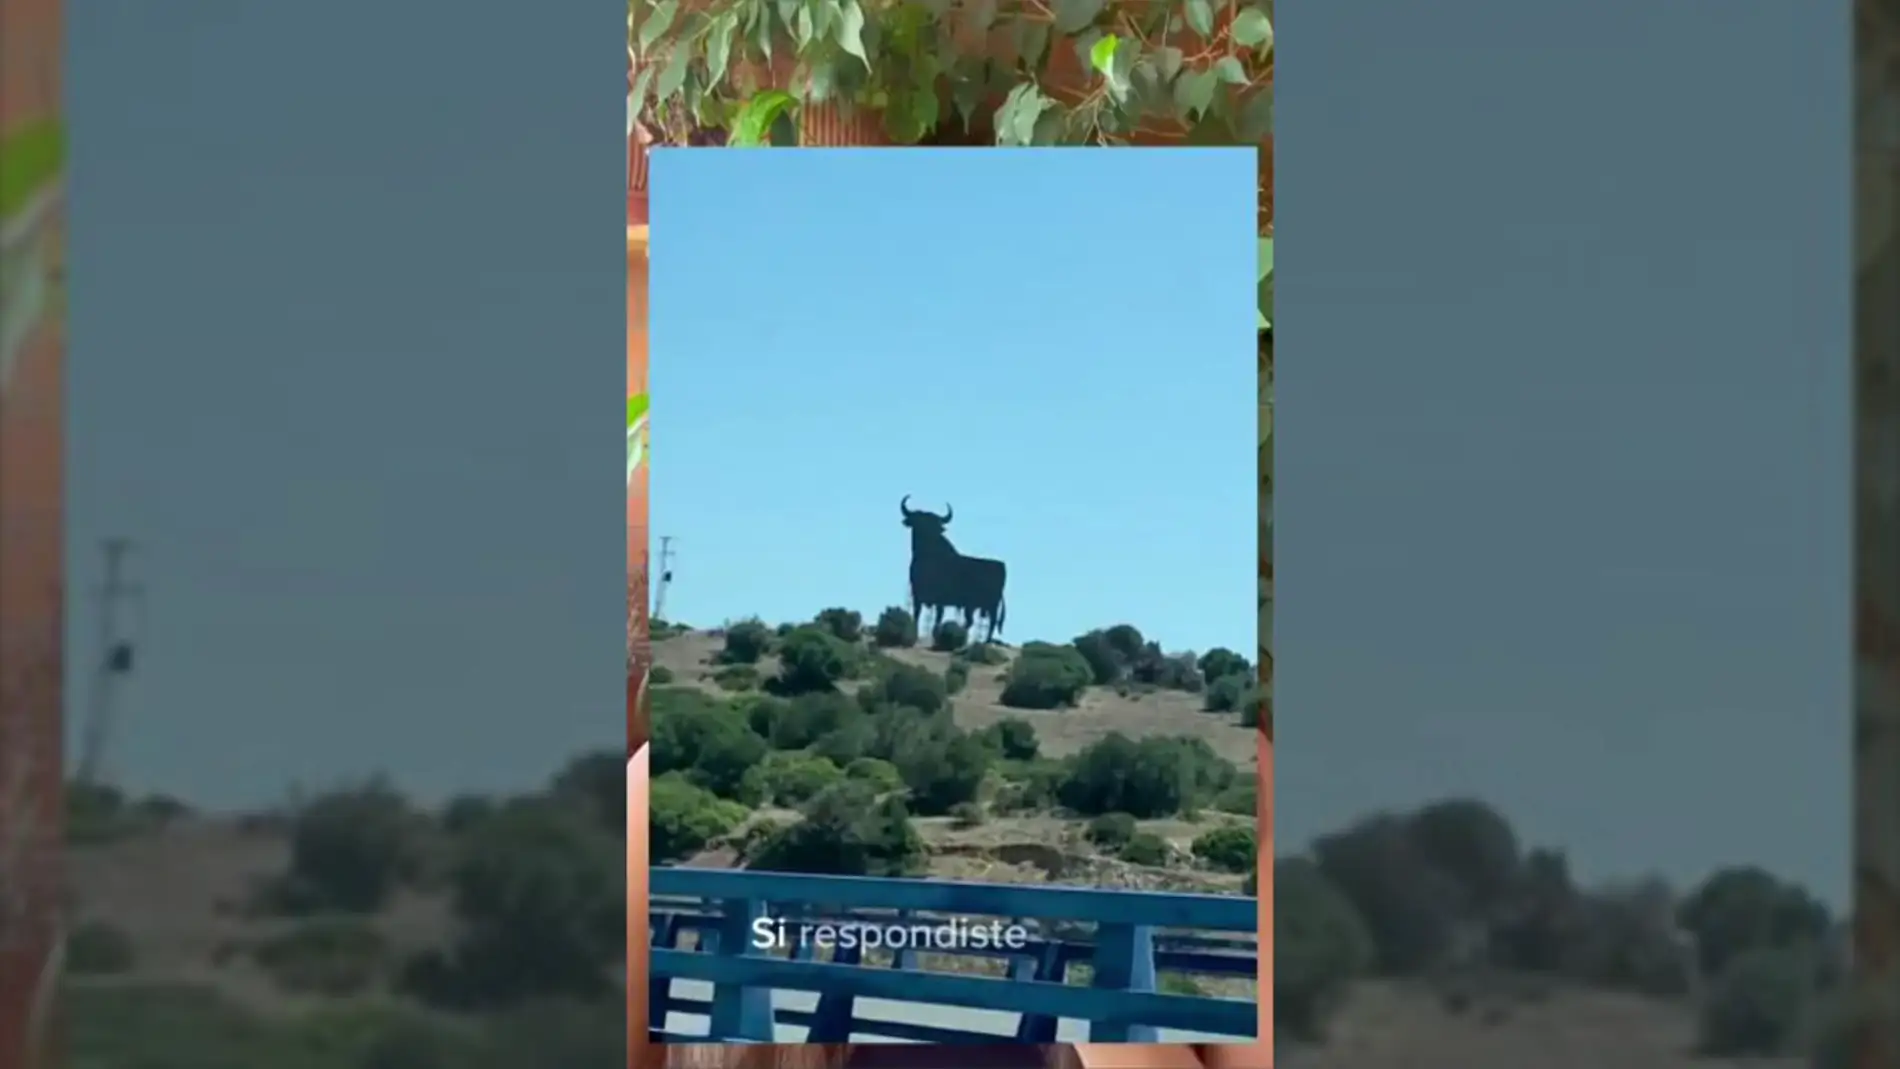 Una mujer mexicana desvela algo sobre los toros de Osborne: "Pensaba que era algo de México"